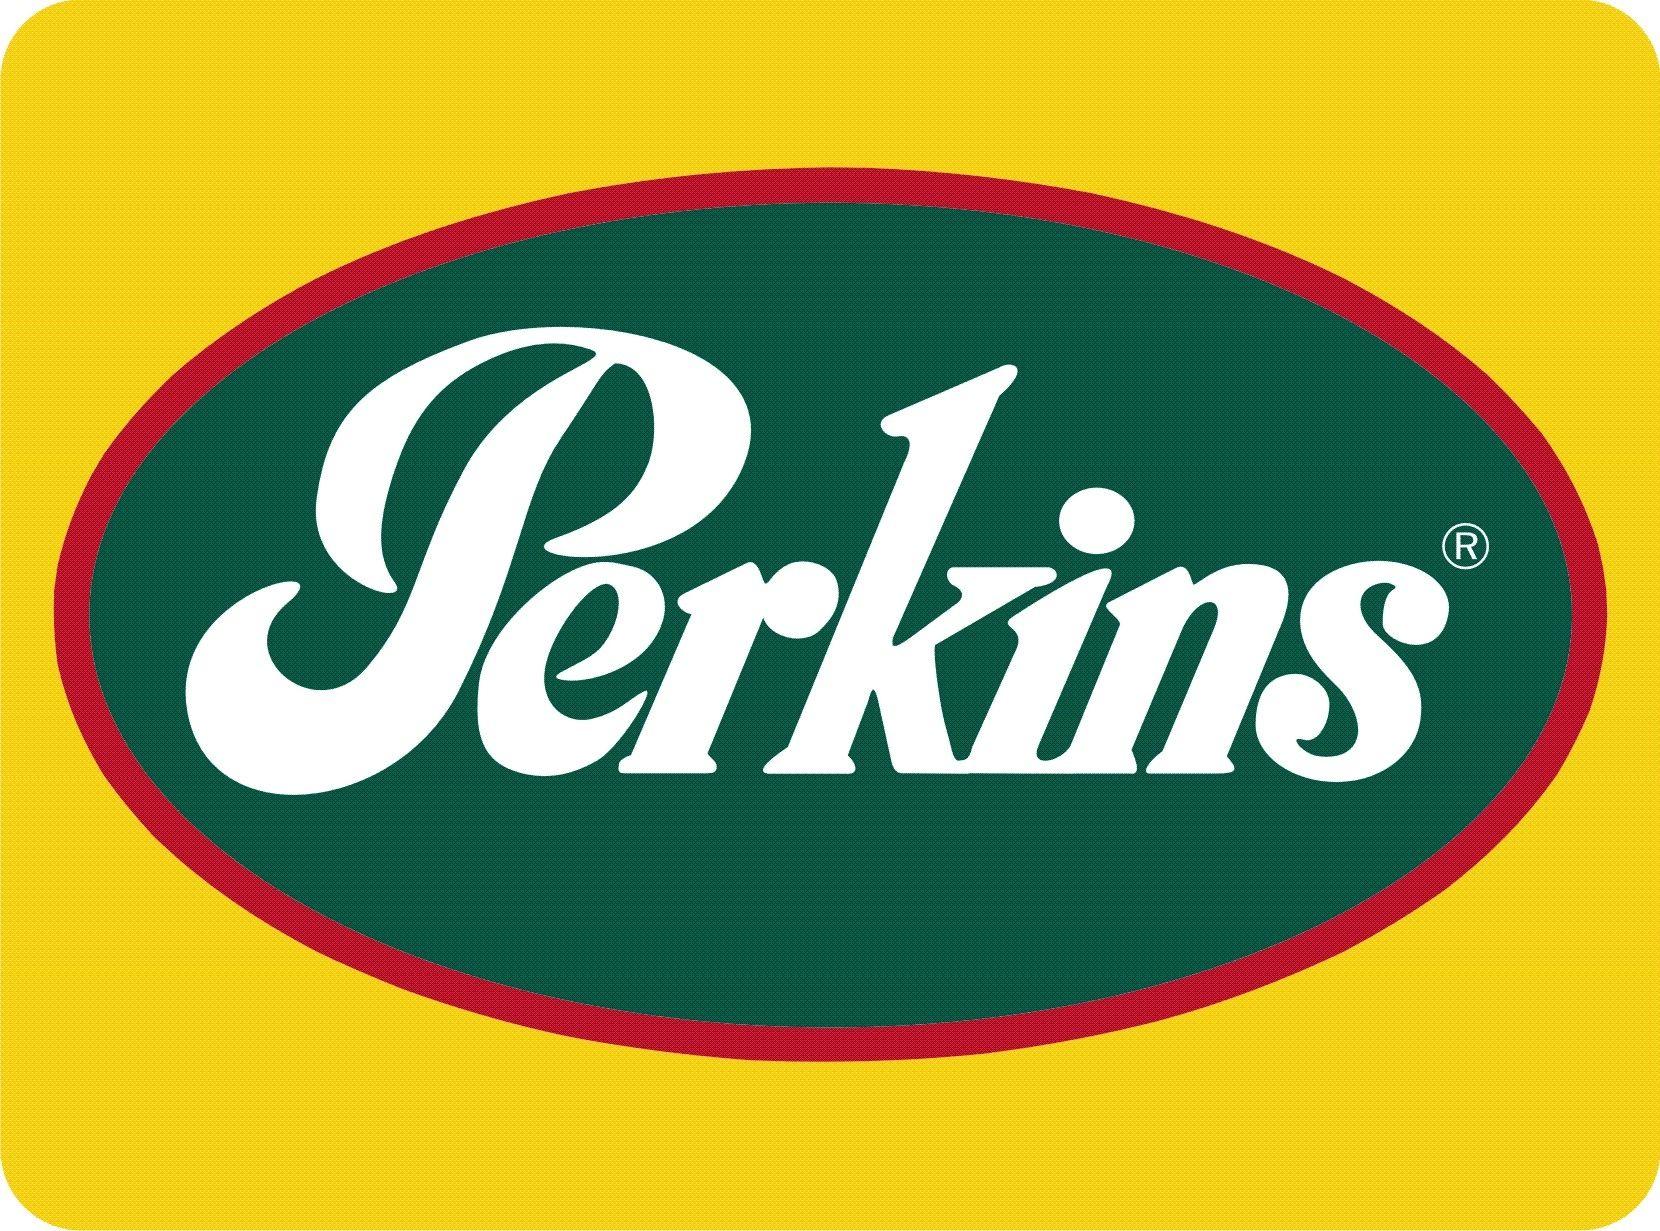 Perkins Restaurant Logo - Ohio Logos